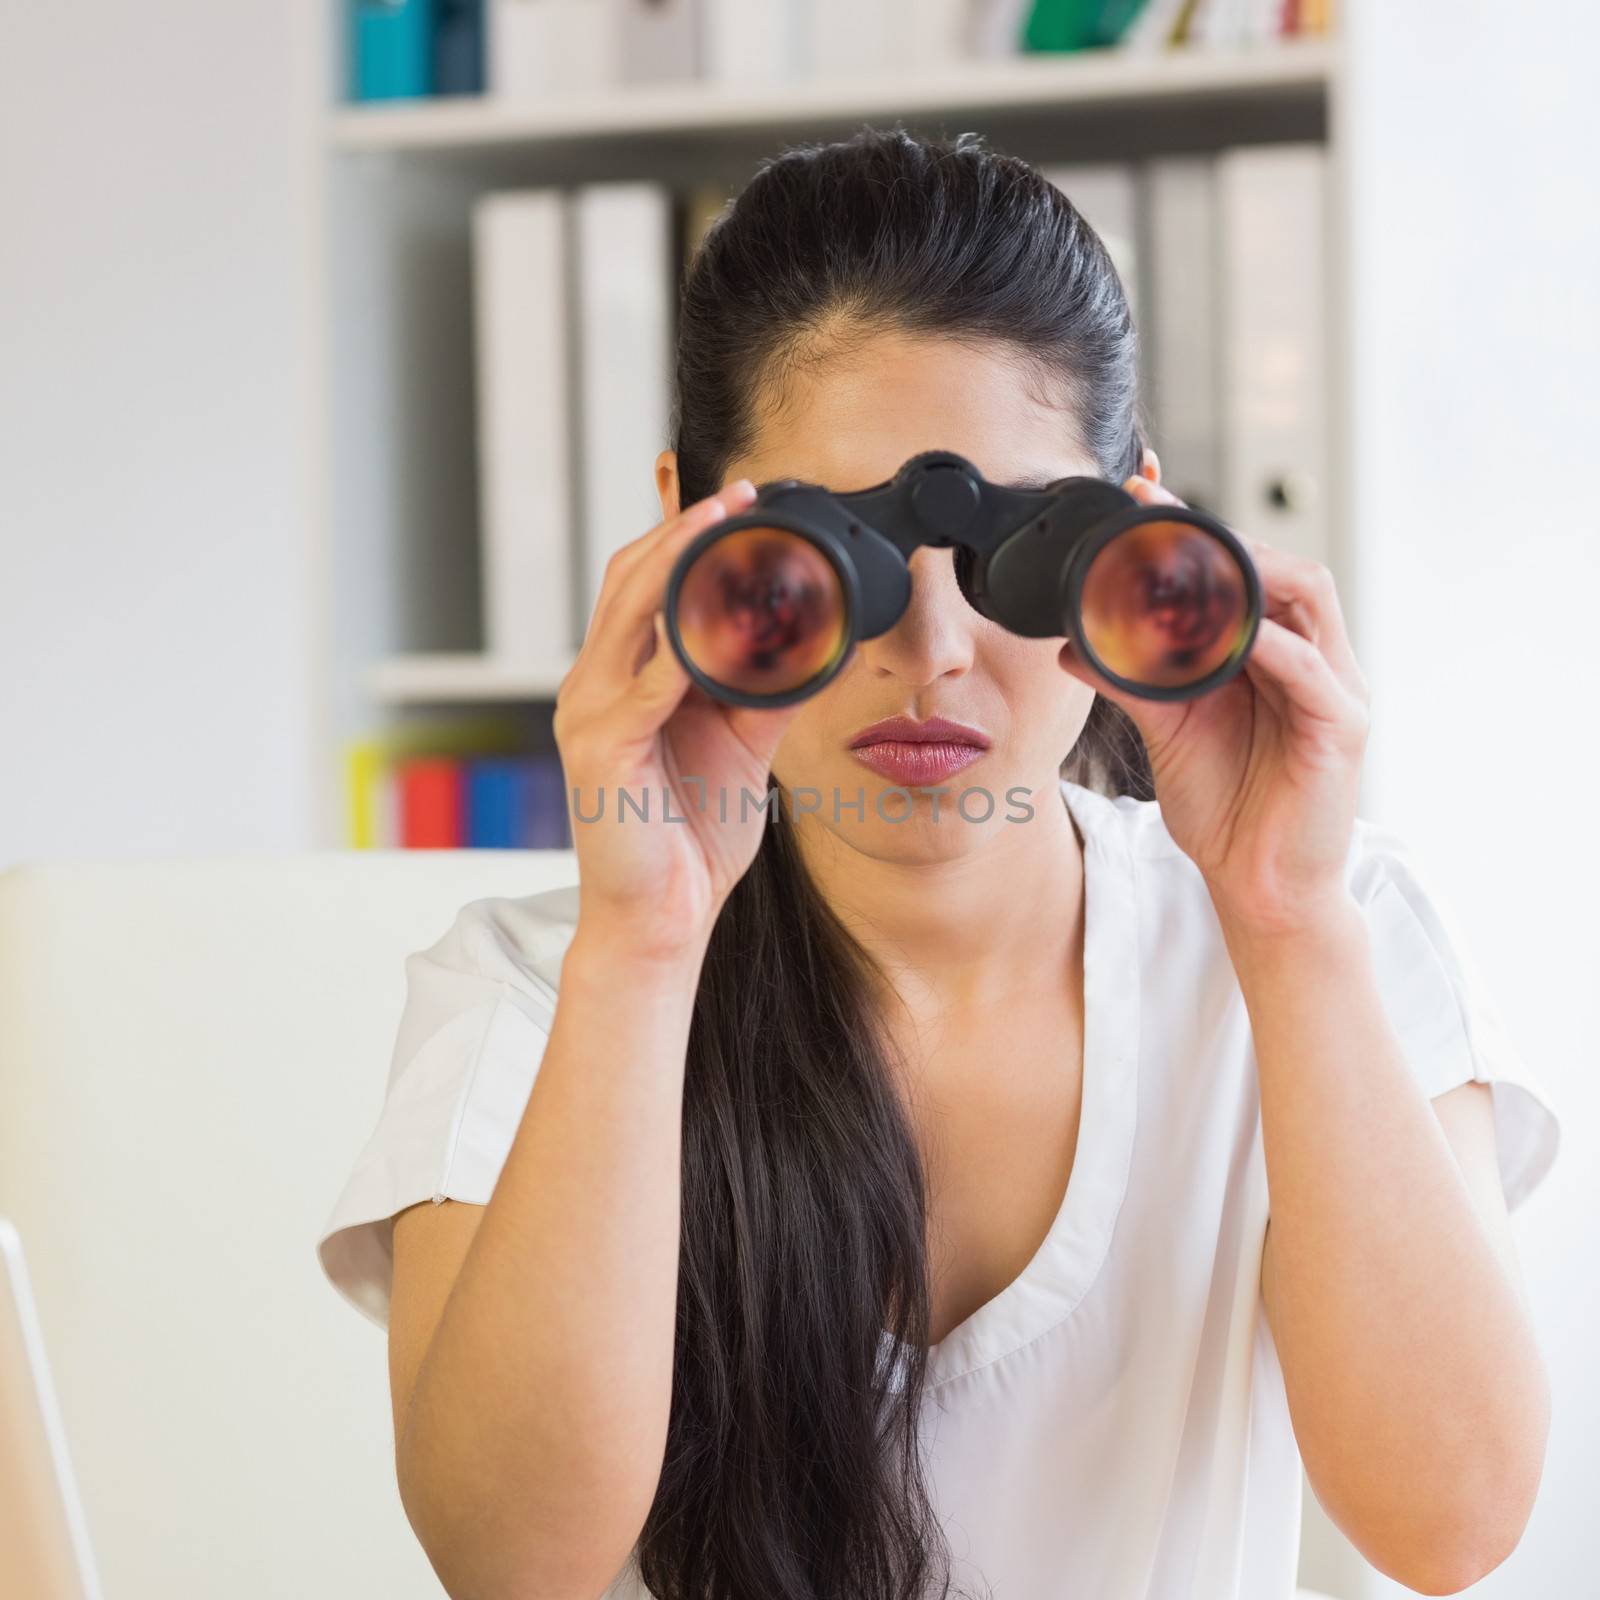 Determined businesswoman looking through binoculars by Wavebreakmedia